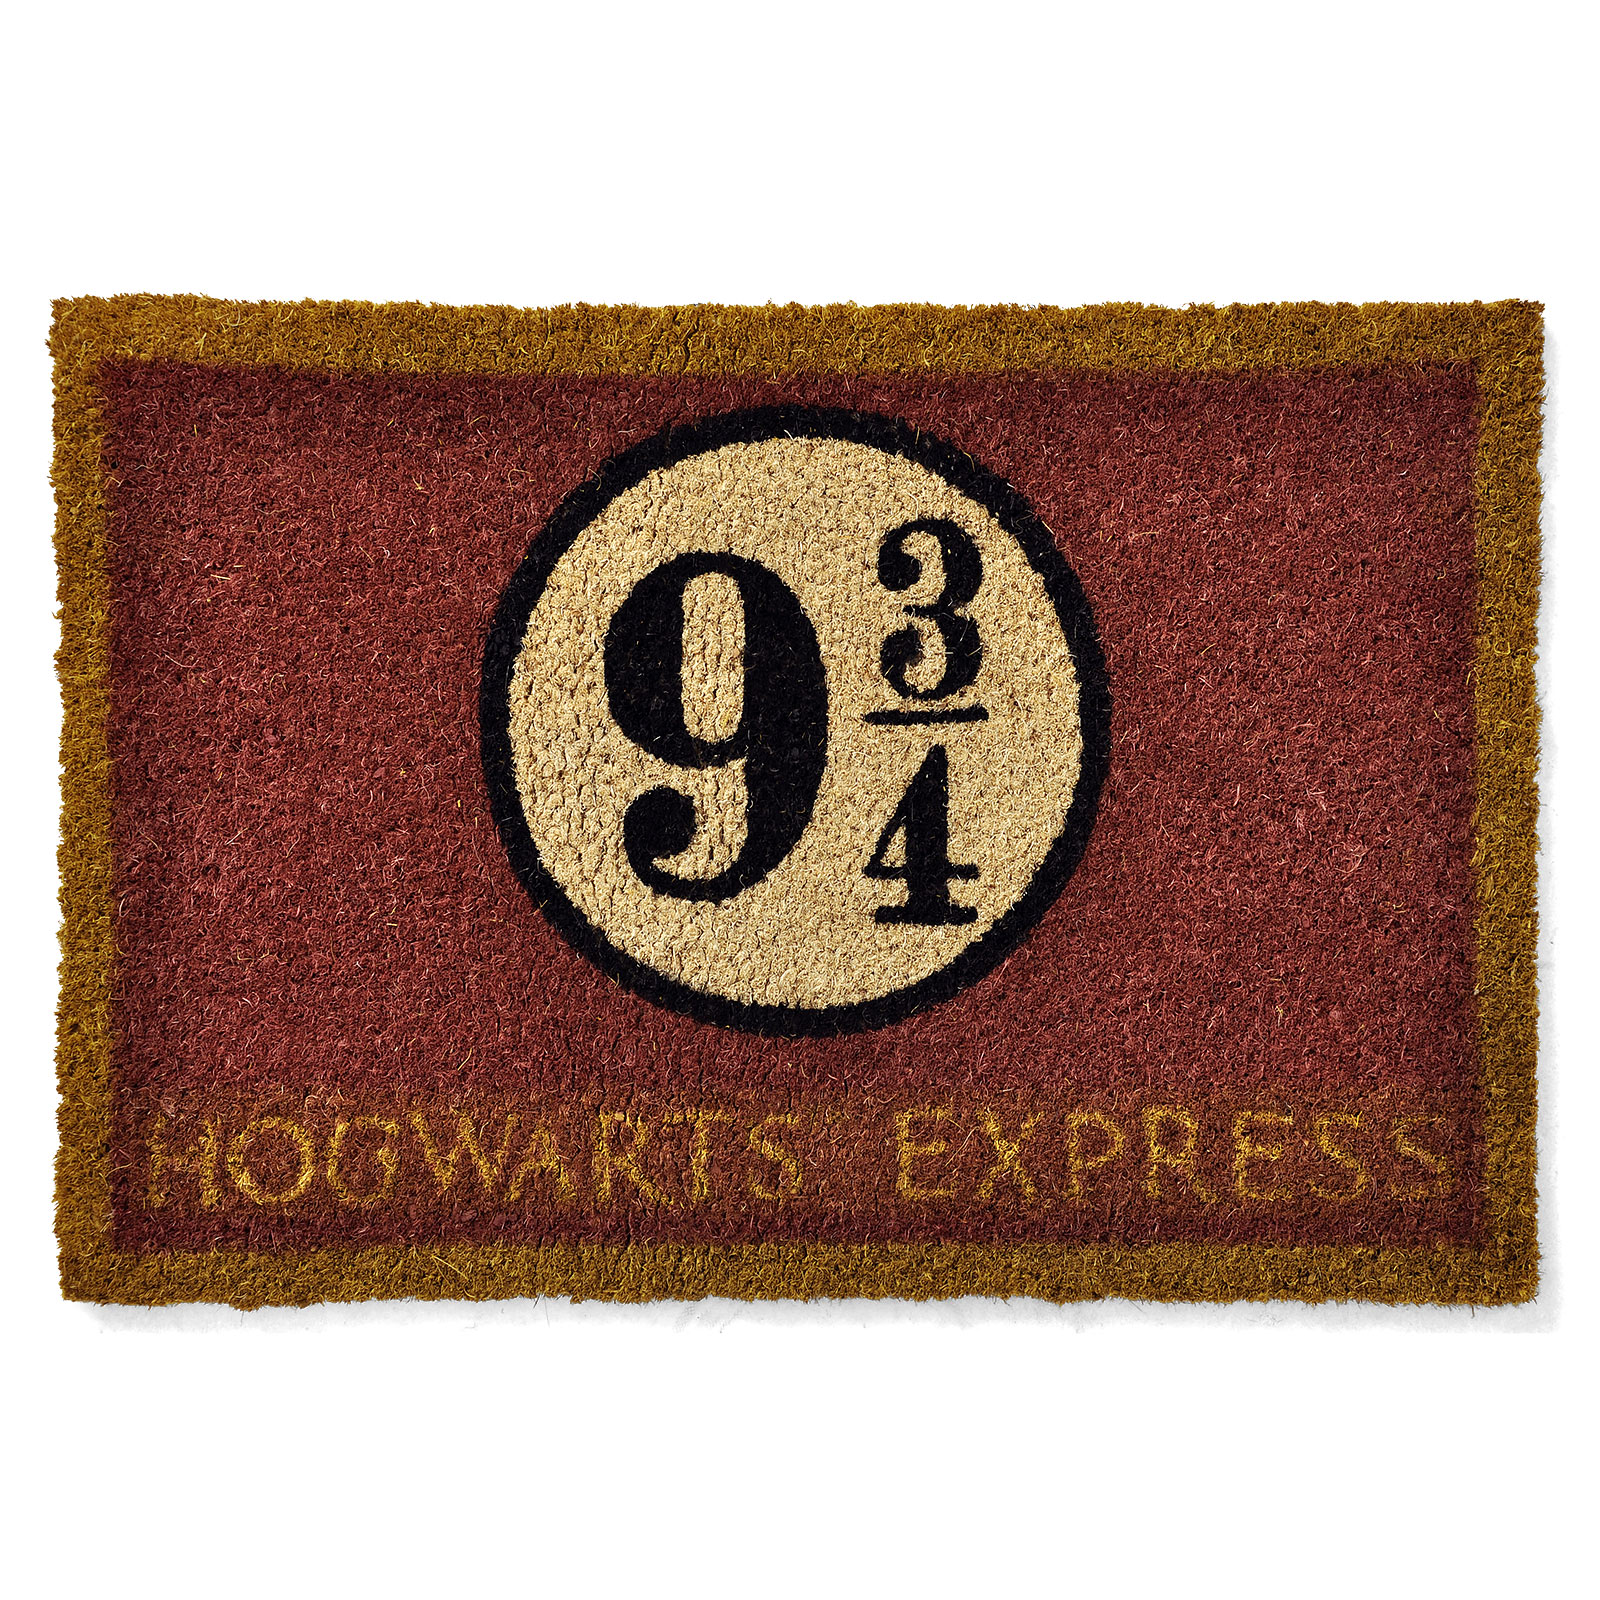 Harry Potter - 9 3/4 Hogwarts Express Deurmat